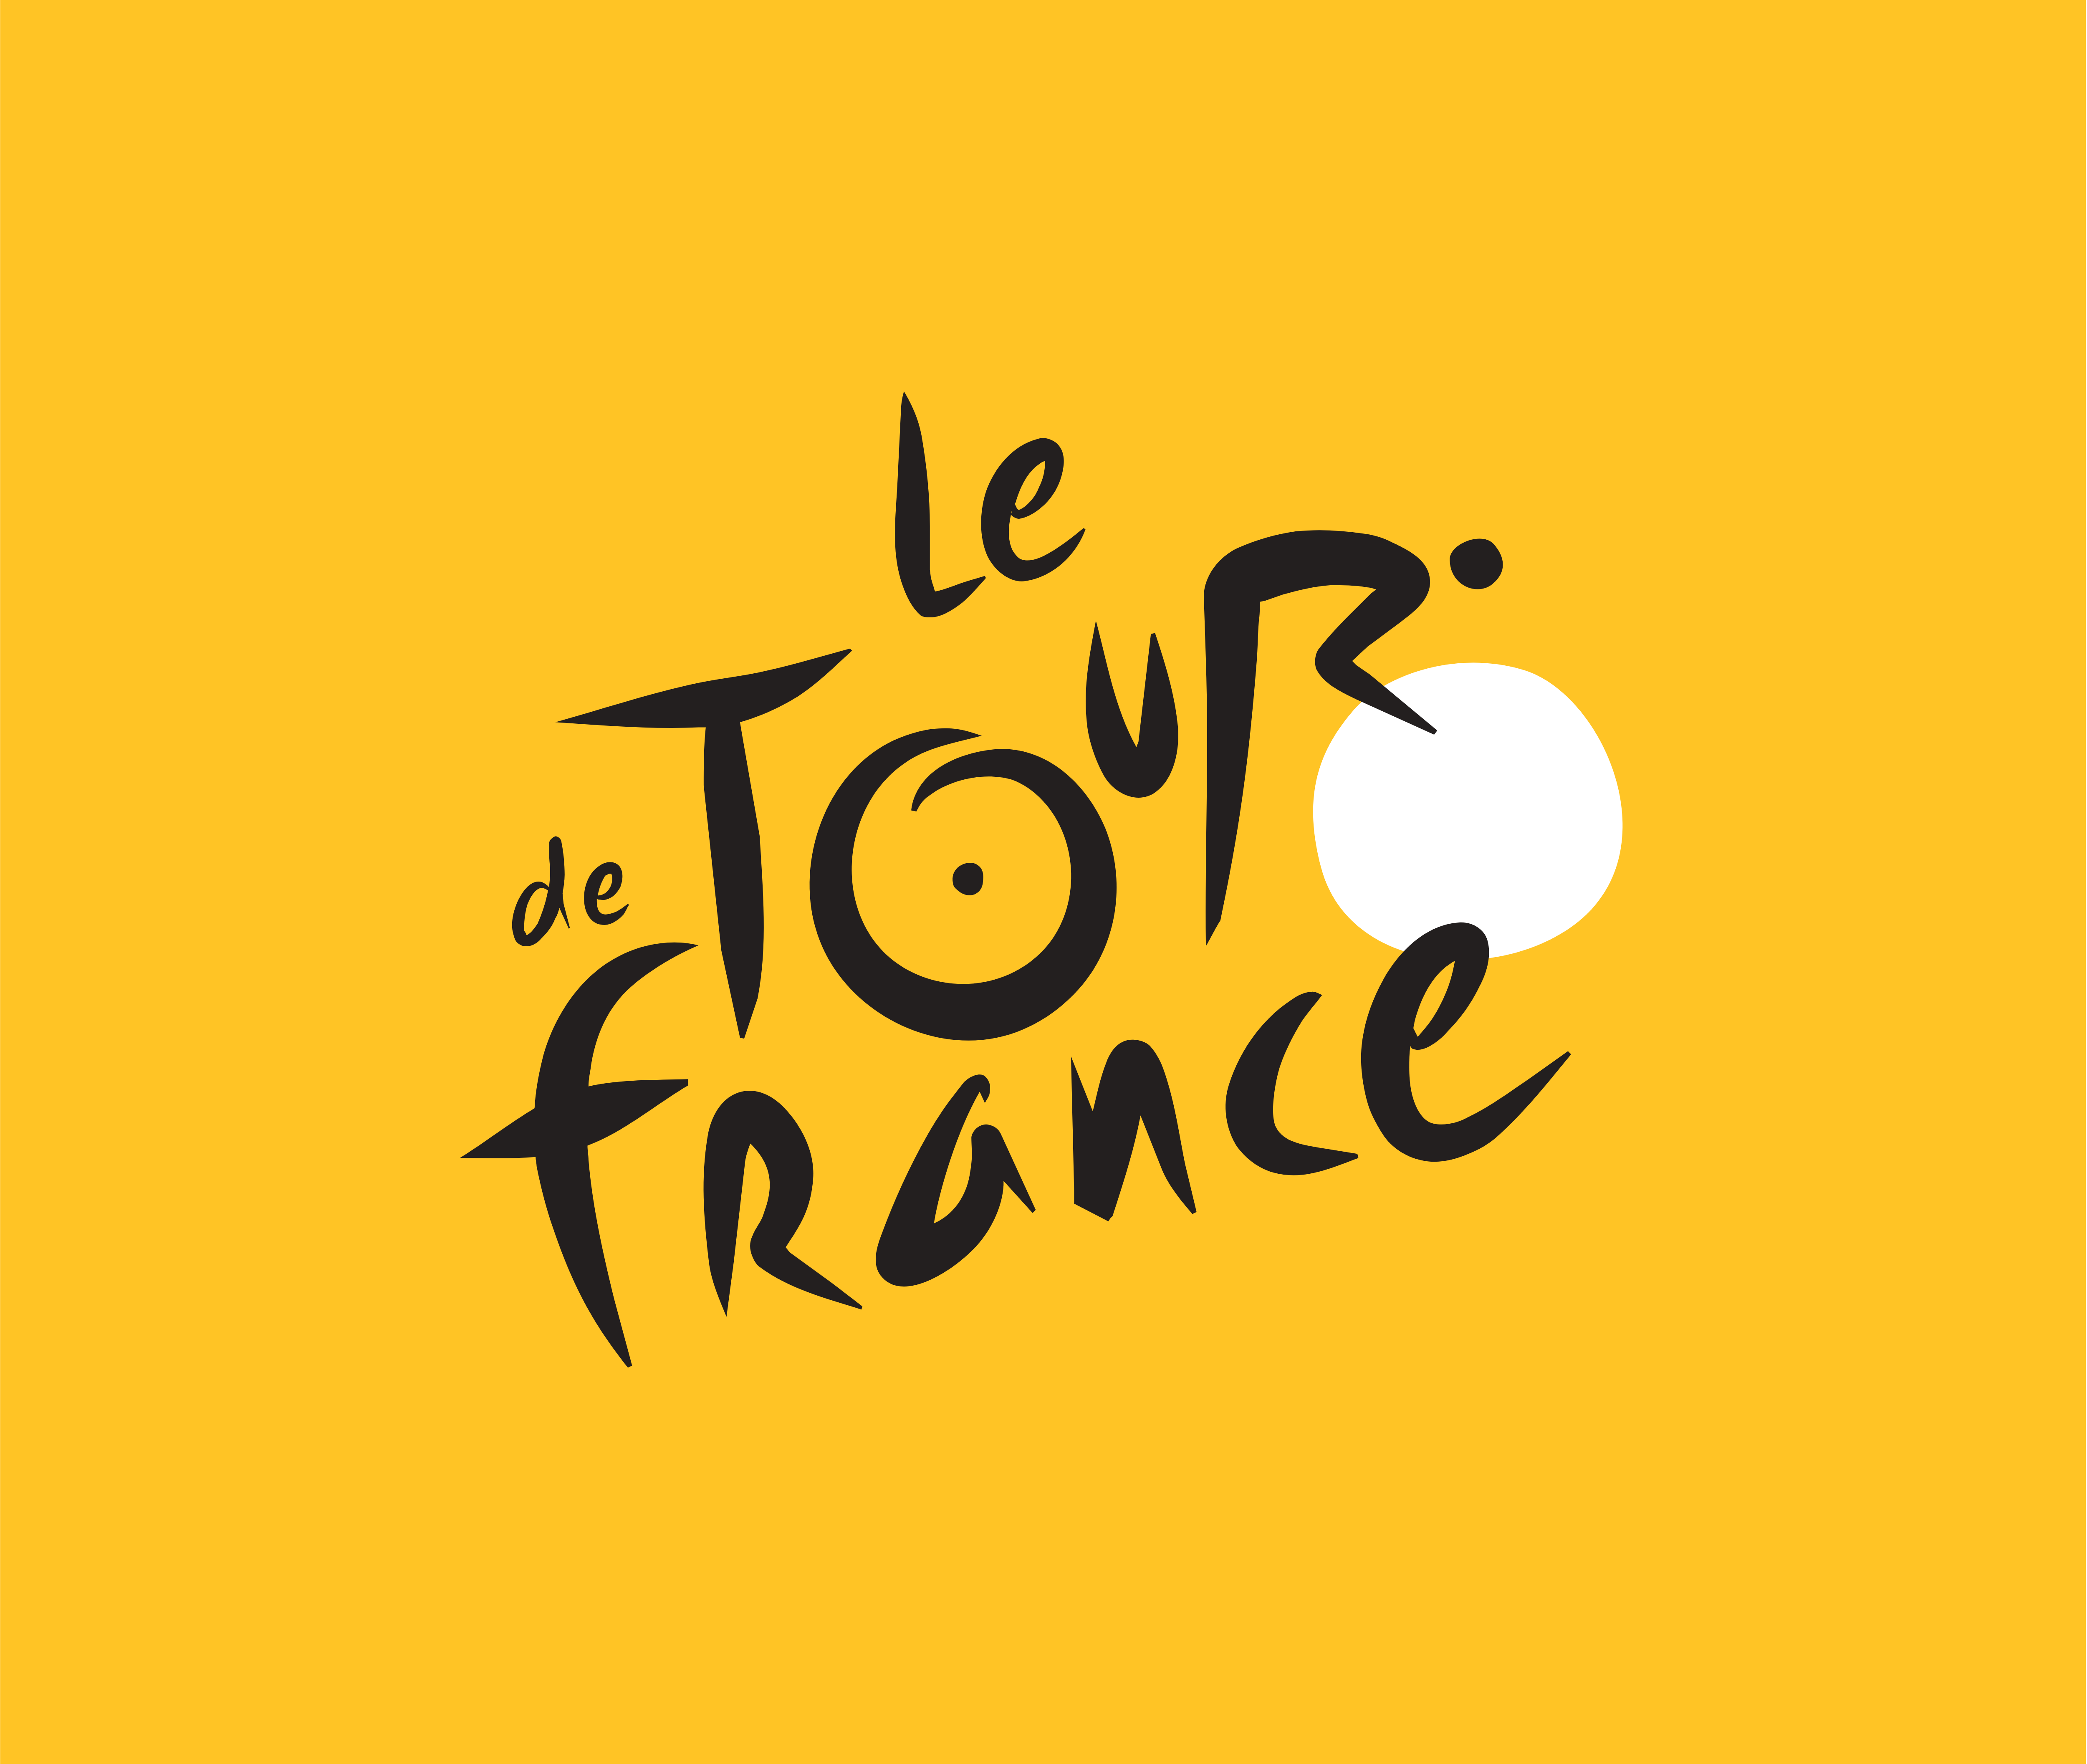 tour the france logo